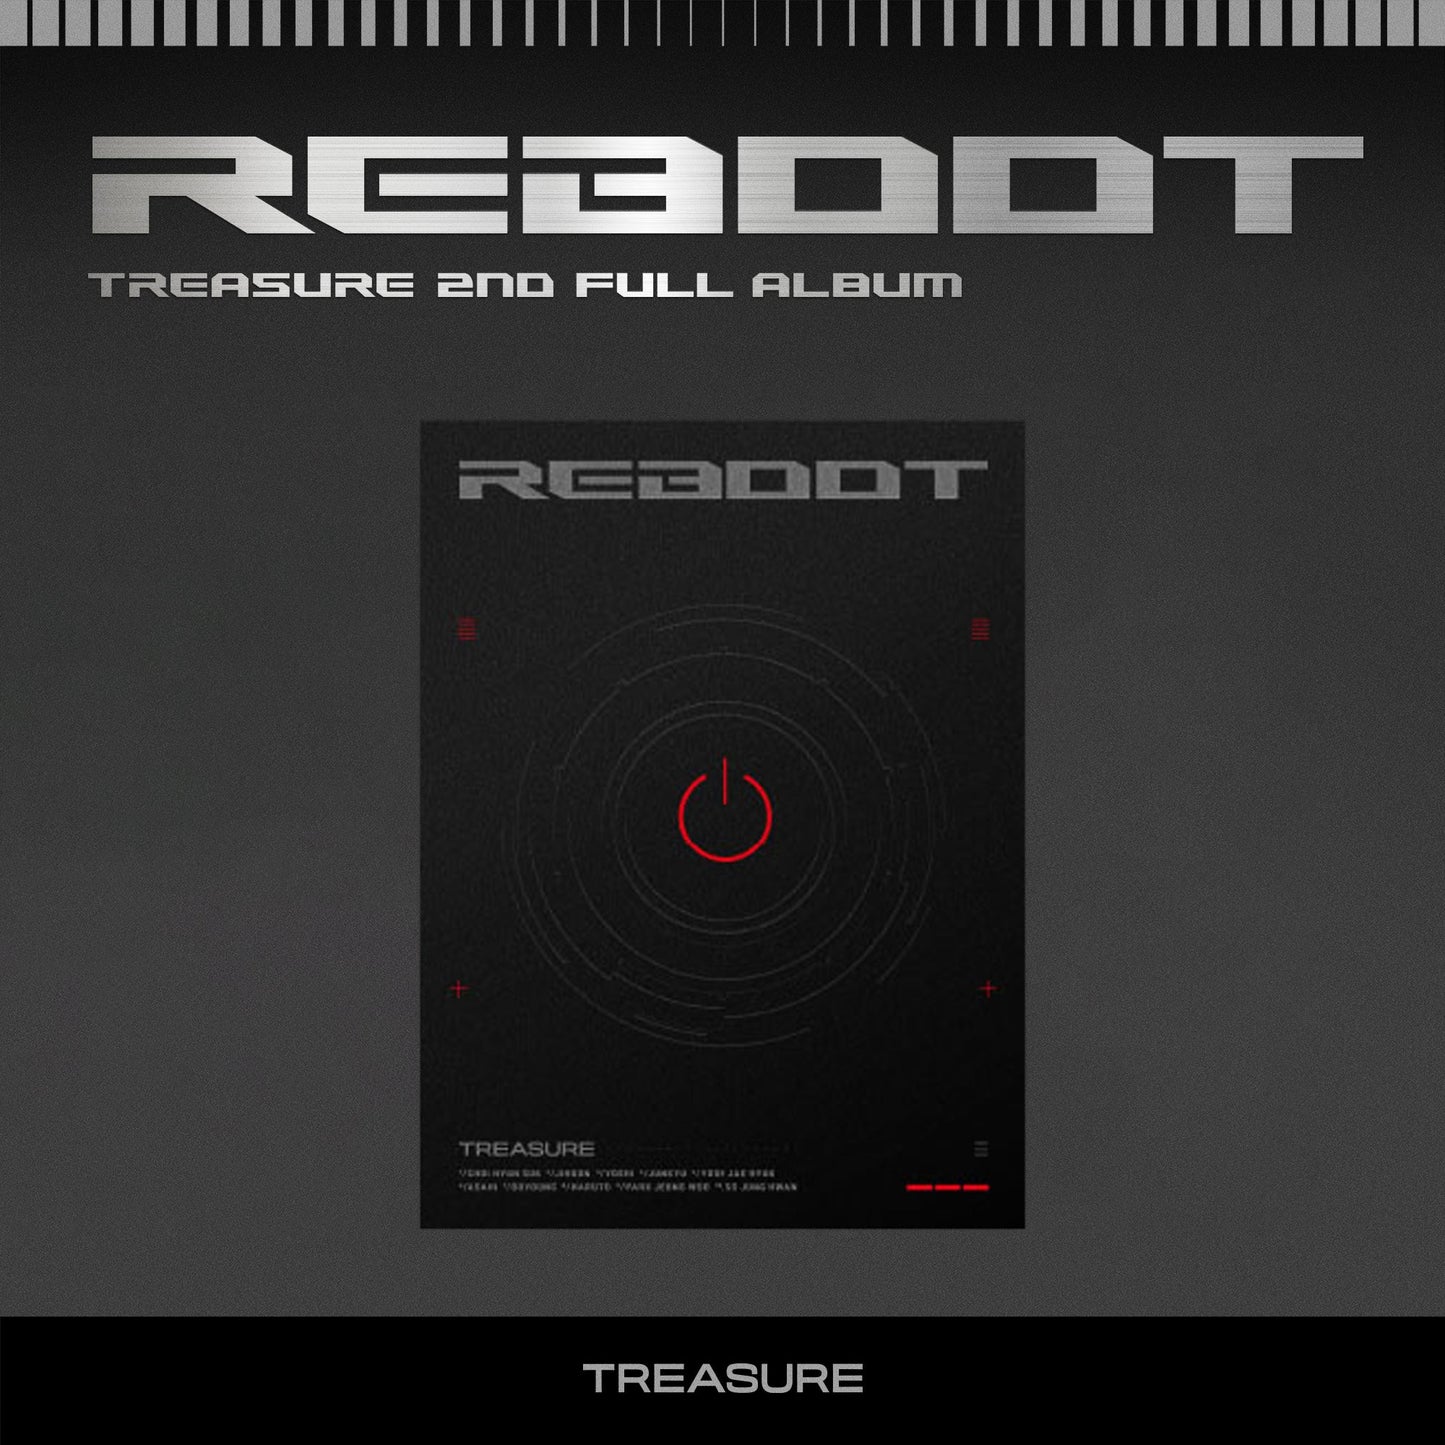 TREASURE 2ND FULL ALBUM 'REBOOT' (PHOTOBOOK) VERSION 1 COVER